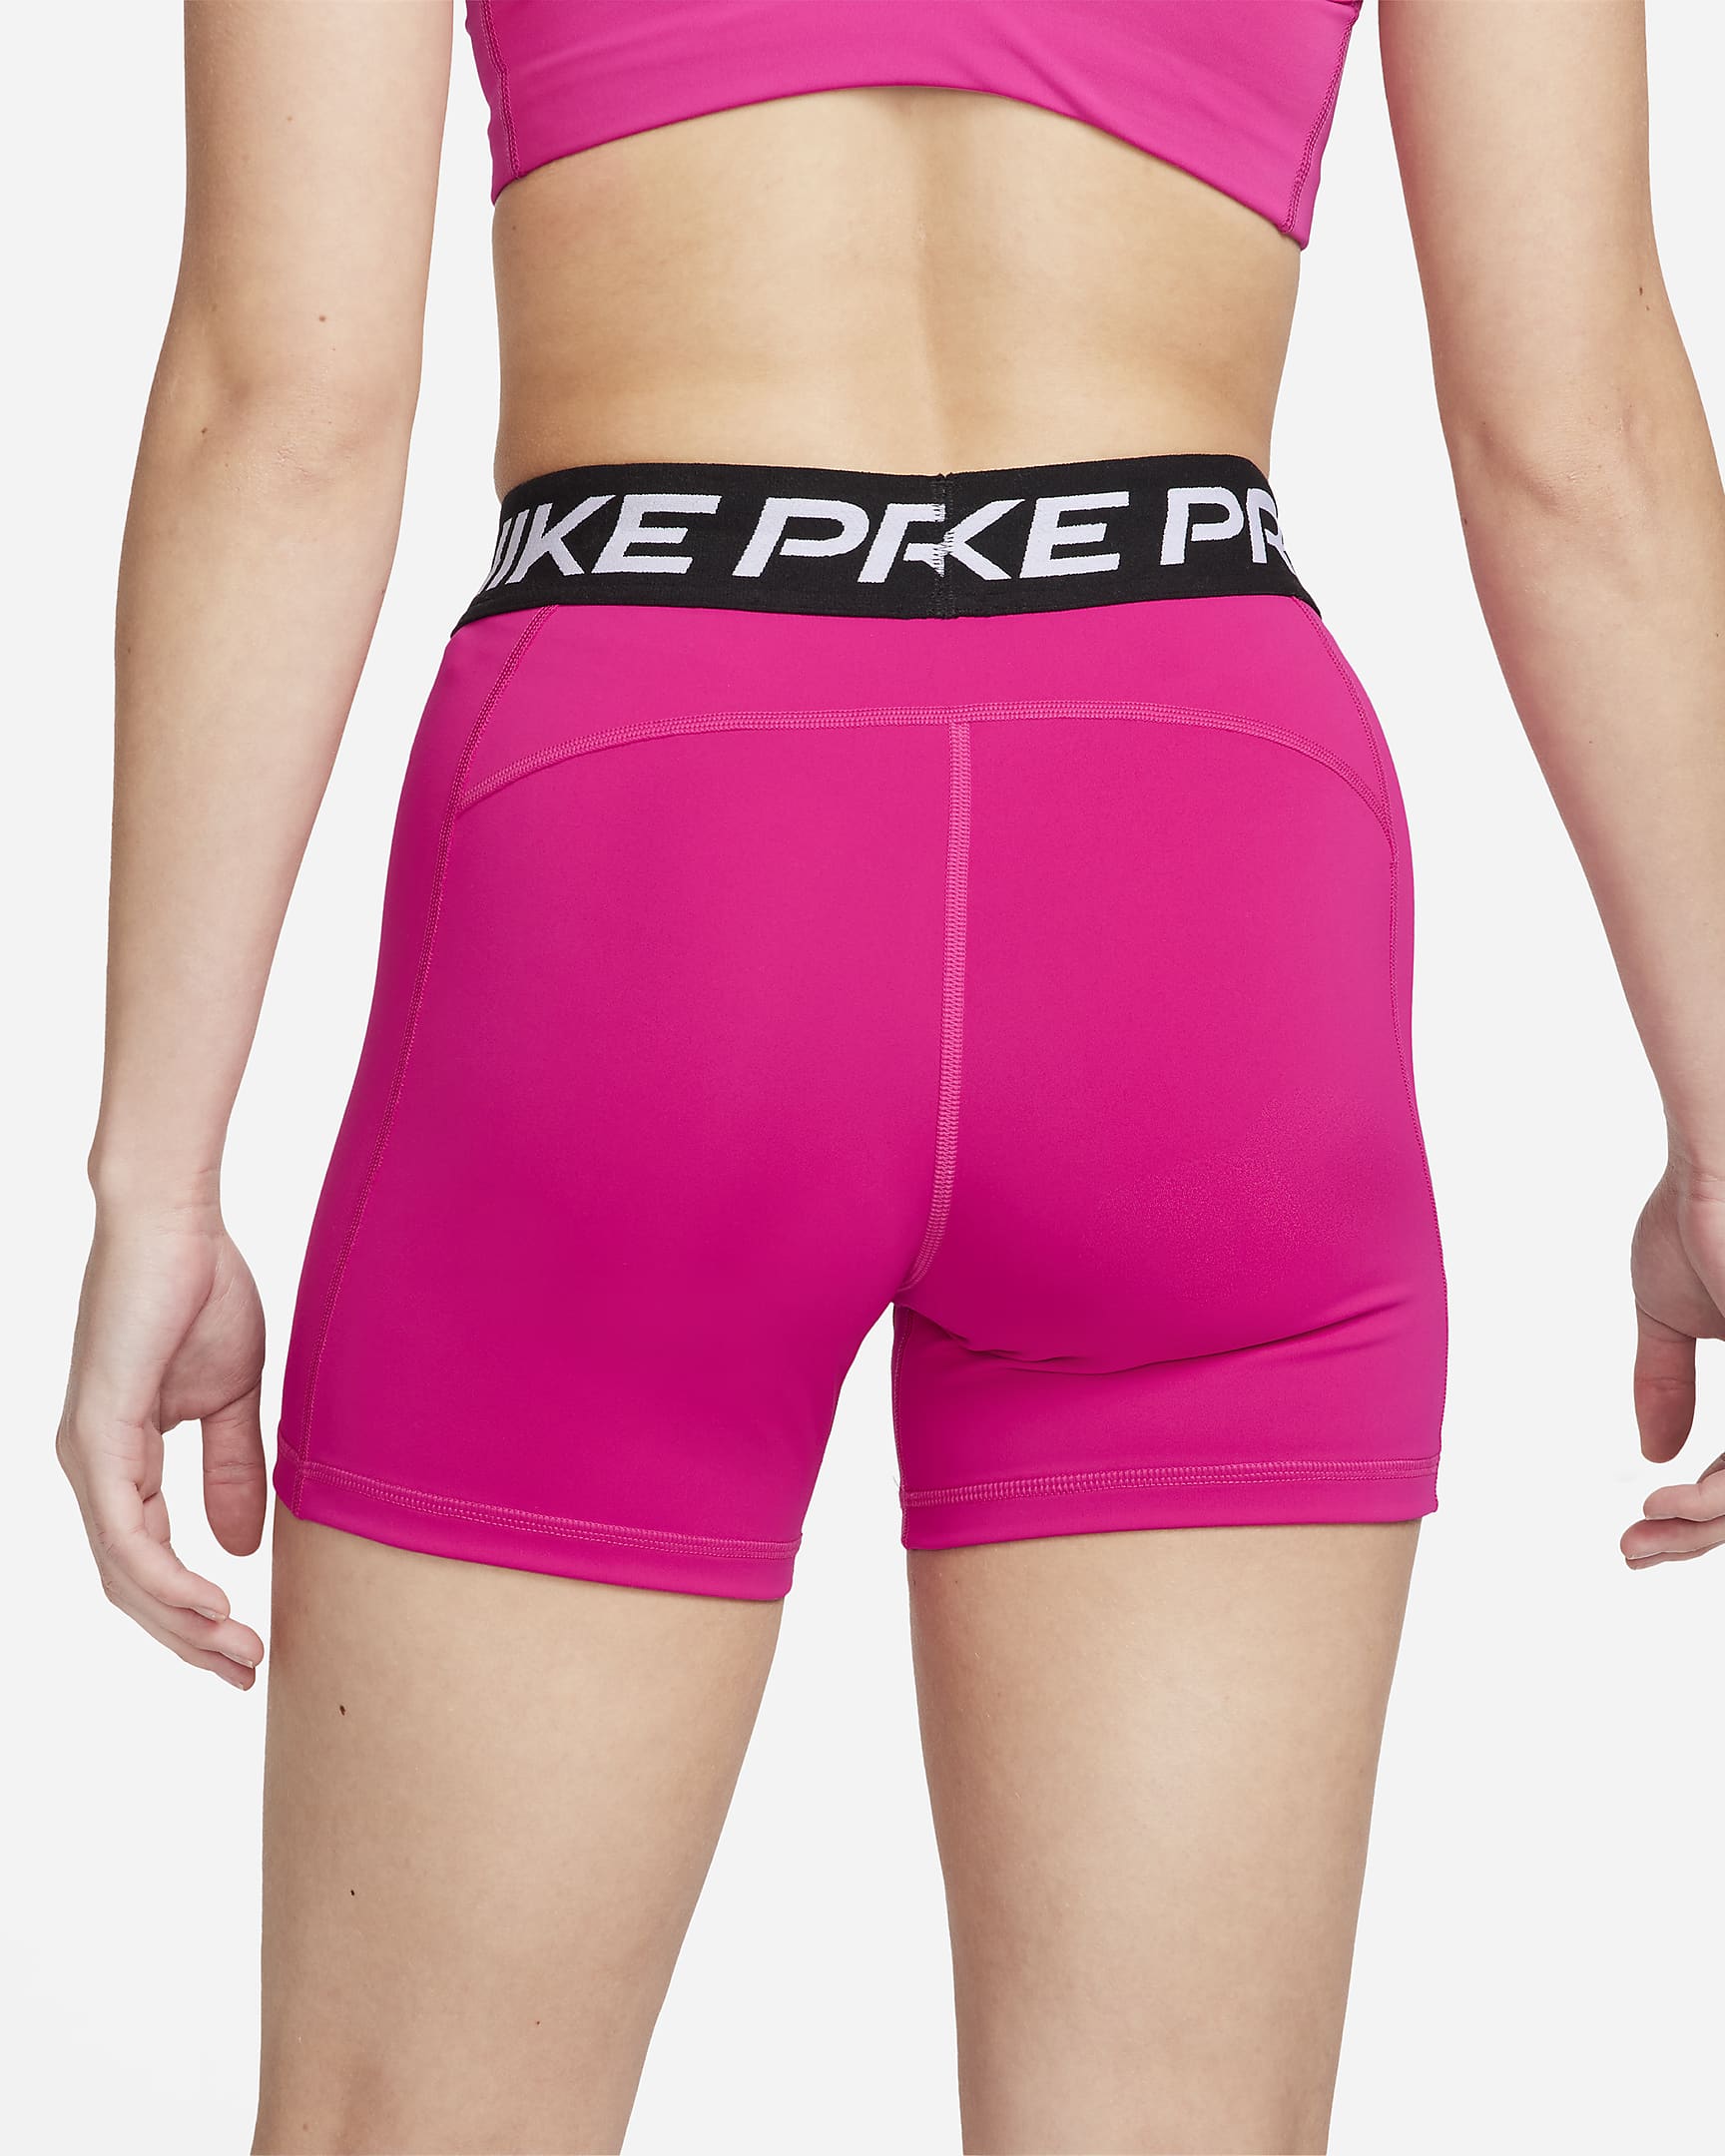 NEW! Nike [S] Women's 365 Pro 5'' Volleyball/Yoga Shorts,  Fireberry/Black/White, CZ9831-616